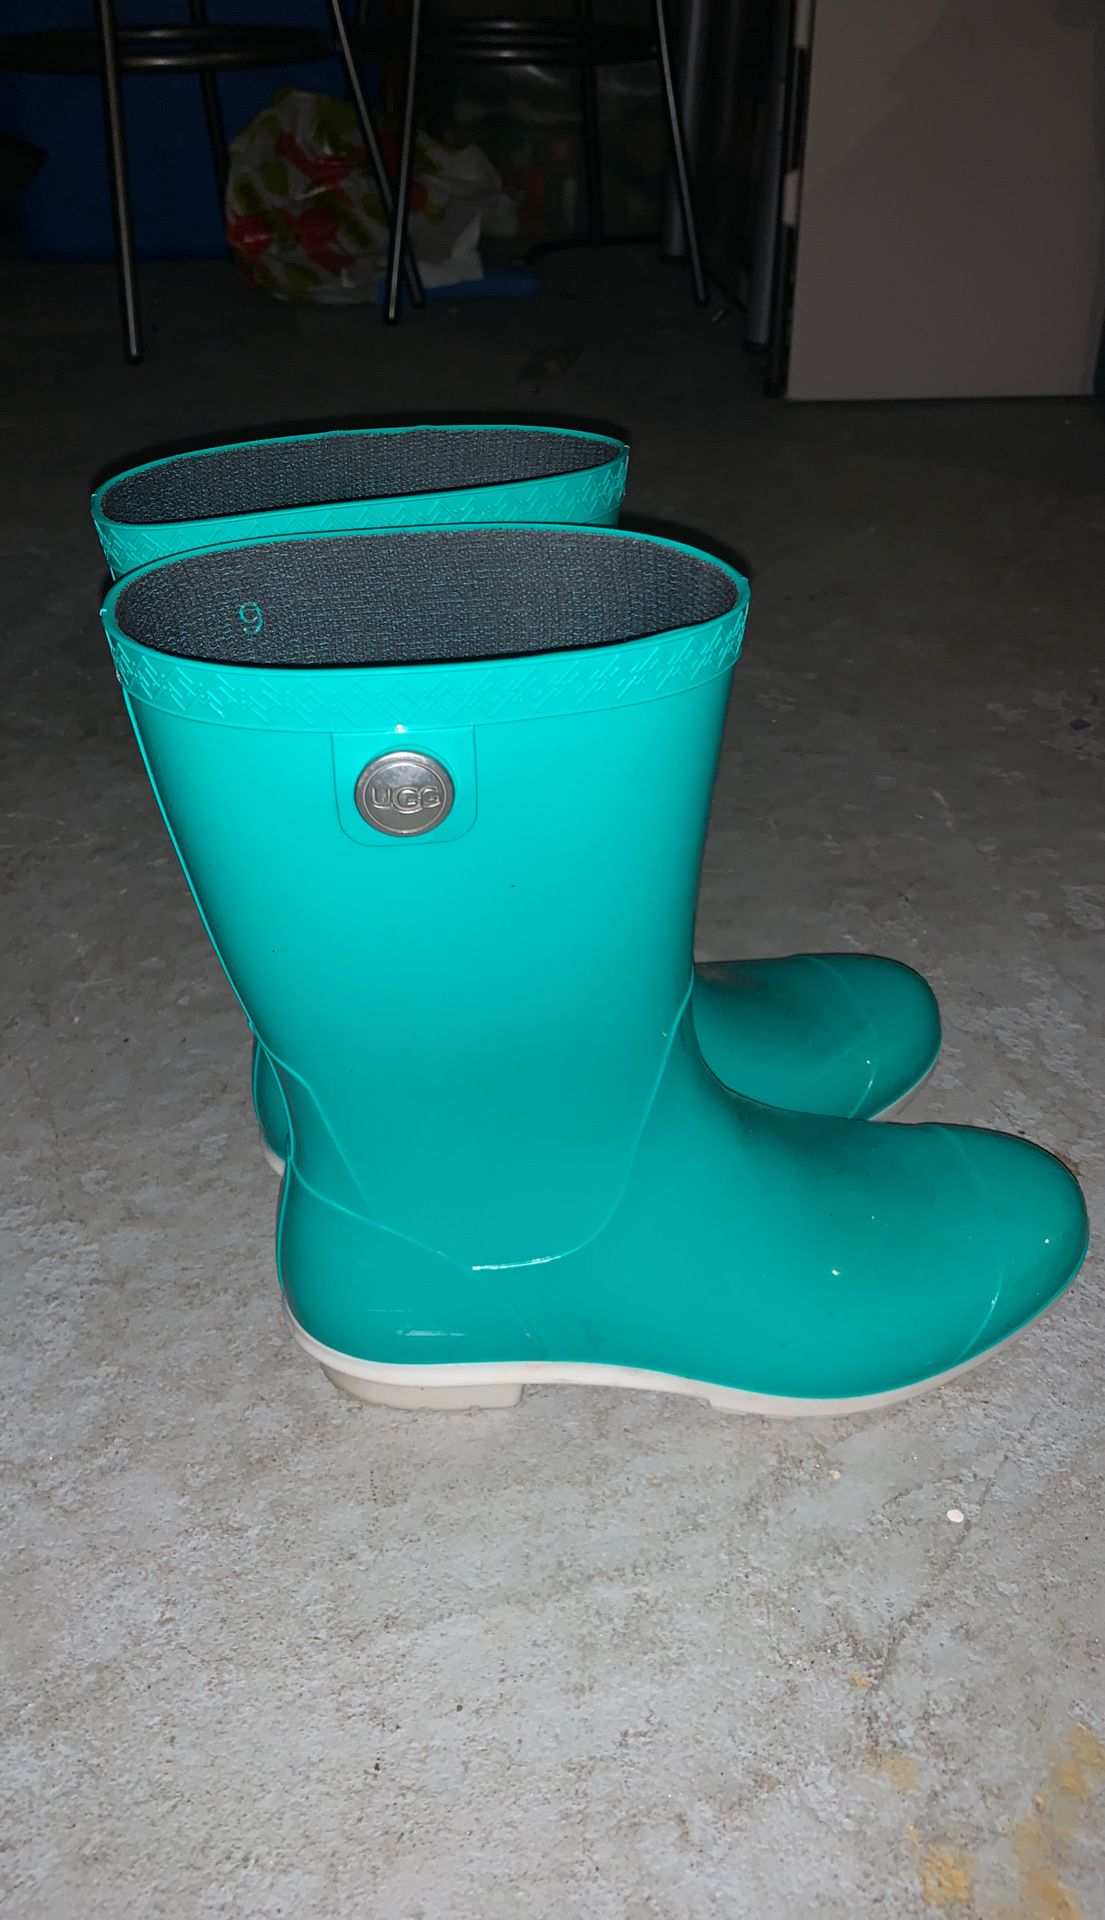 Ugg rain boots women’s size 9 *accepting best offer*